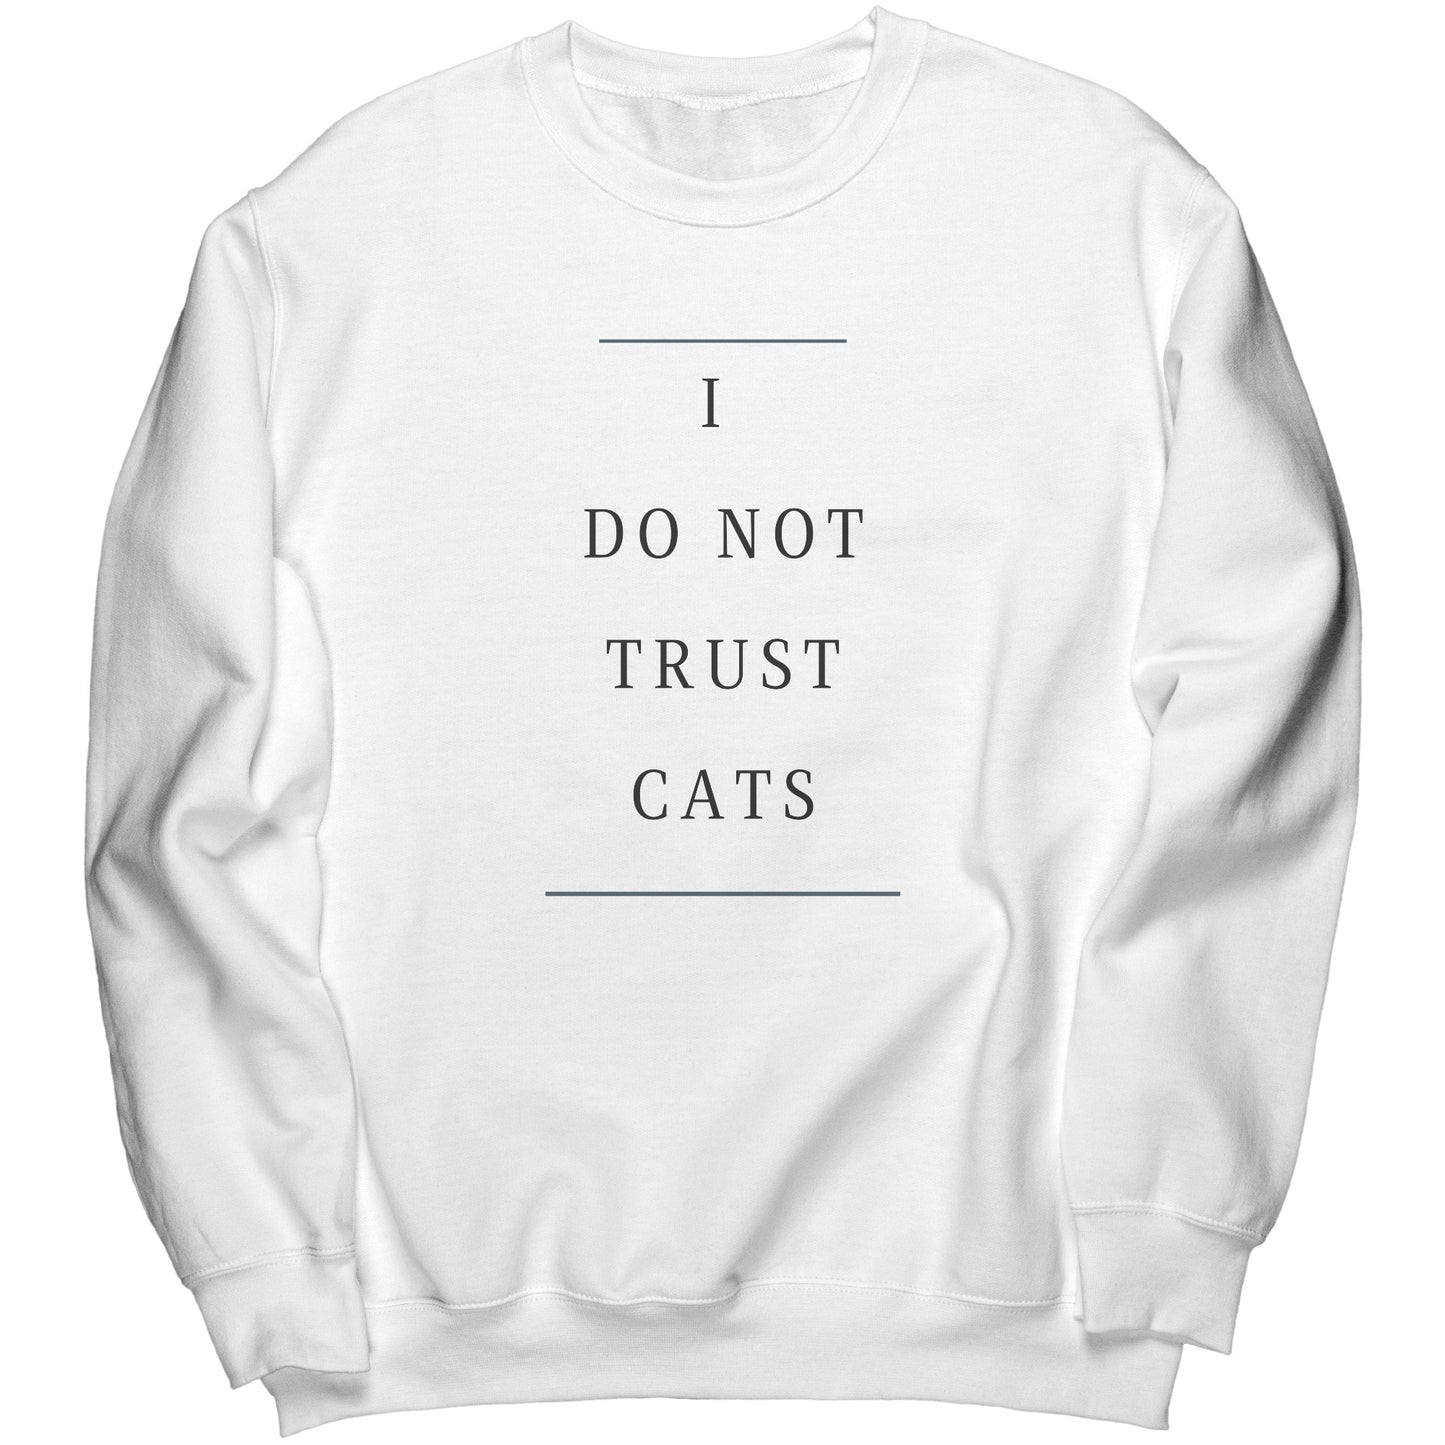 "I Do Not Trust Cats" - Premium Long Sweatshirt